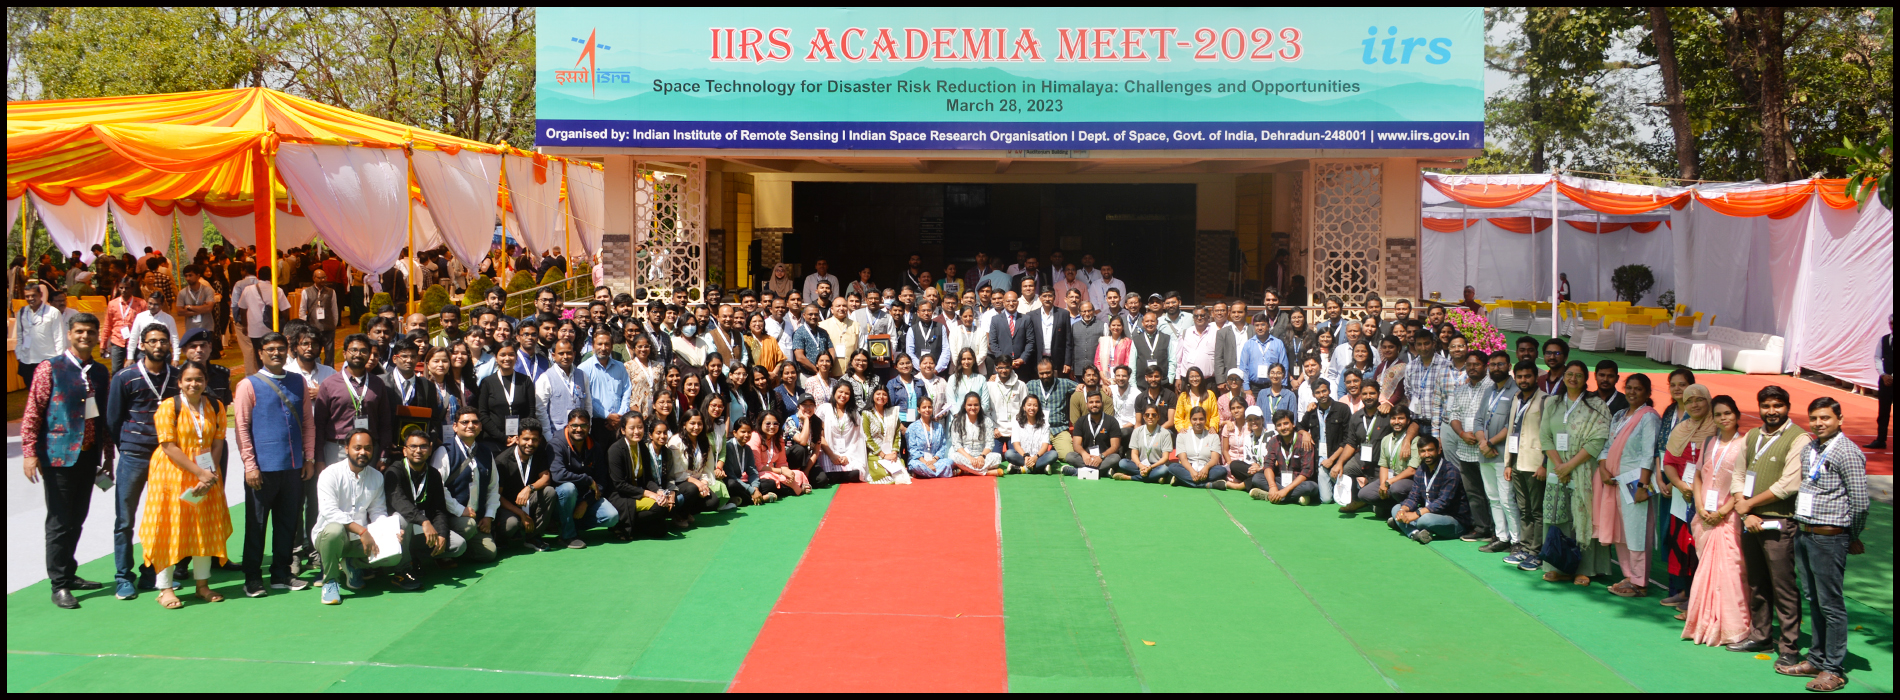  Image of IIRS Academia Meet 2023